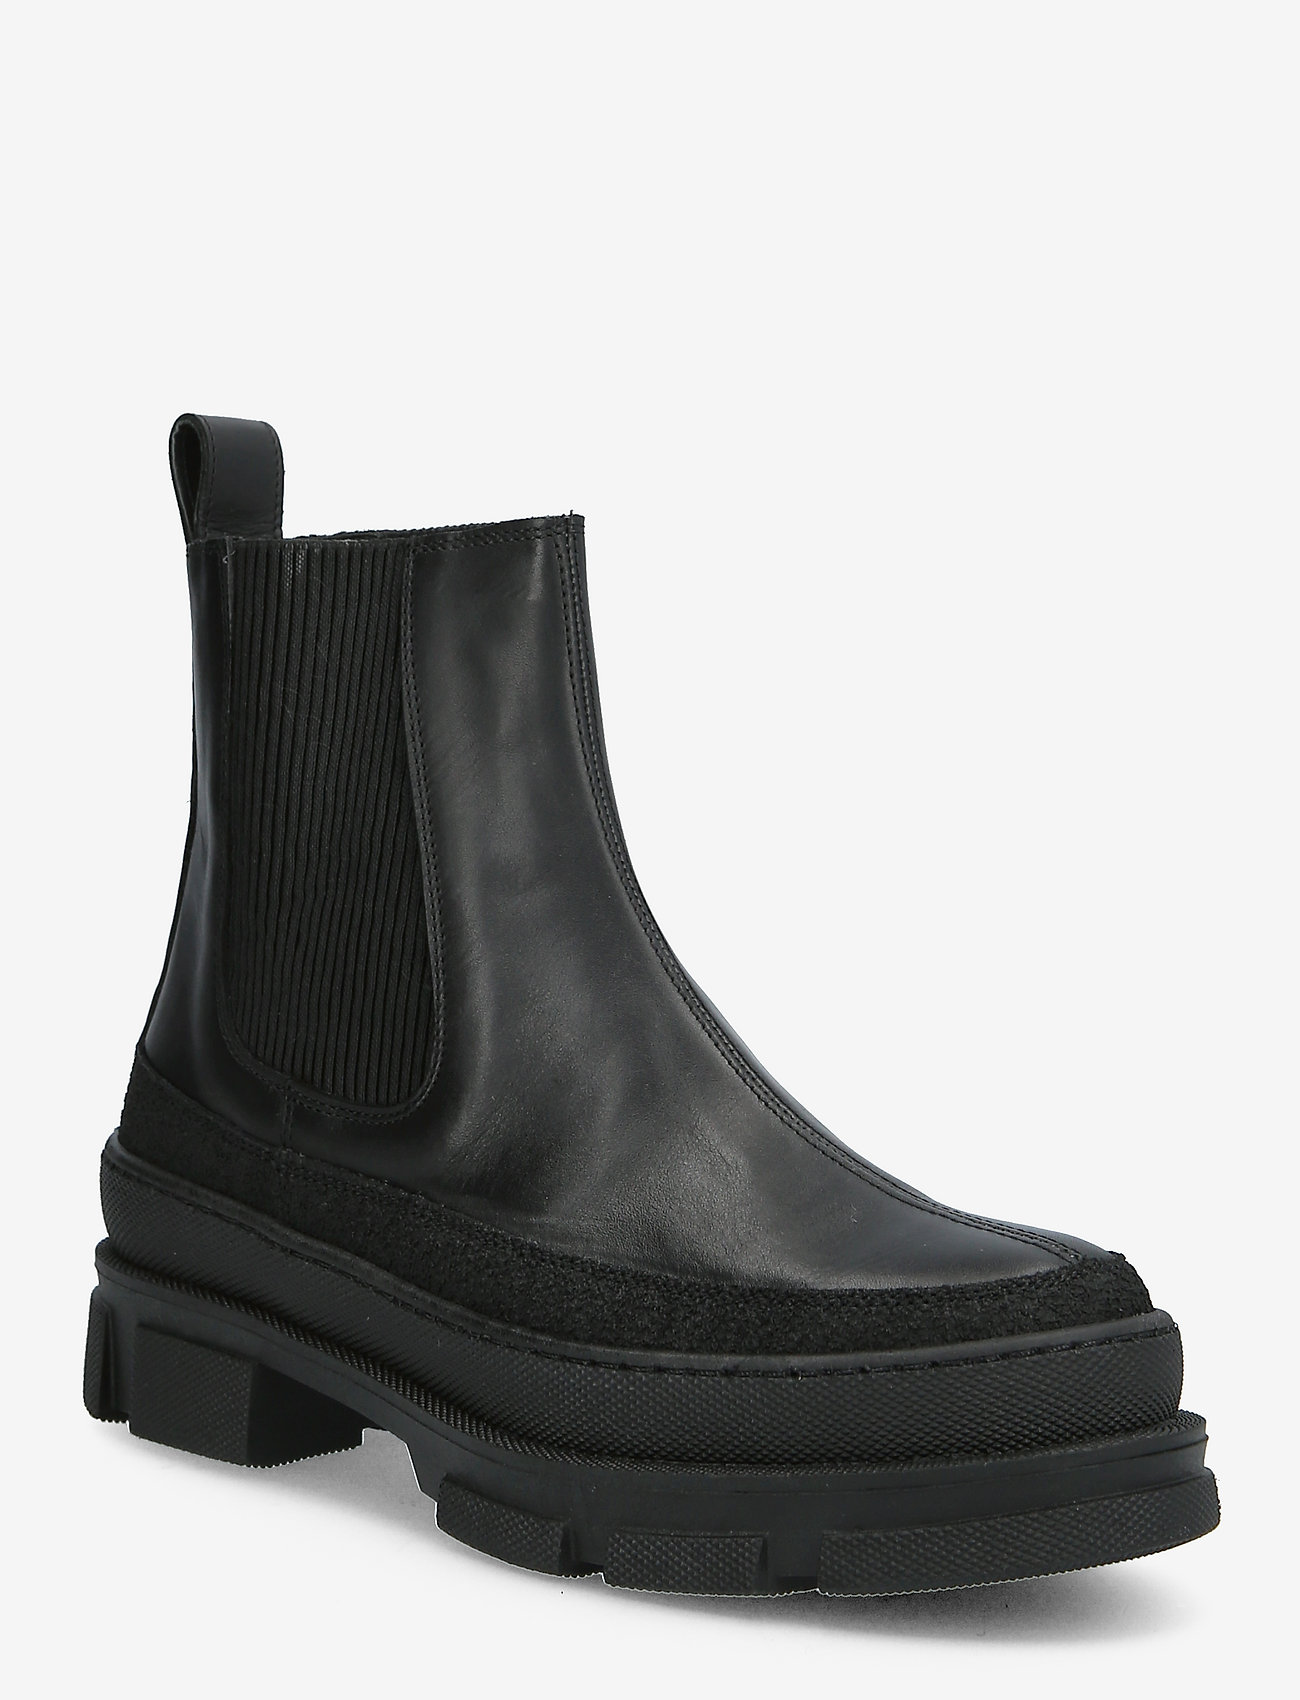 ANGULUS - Boots - flat - chelsea stila zābaki - 1321/1605/019 black/black/blac - 0